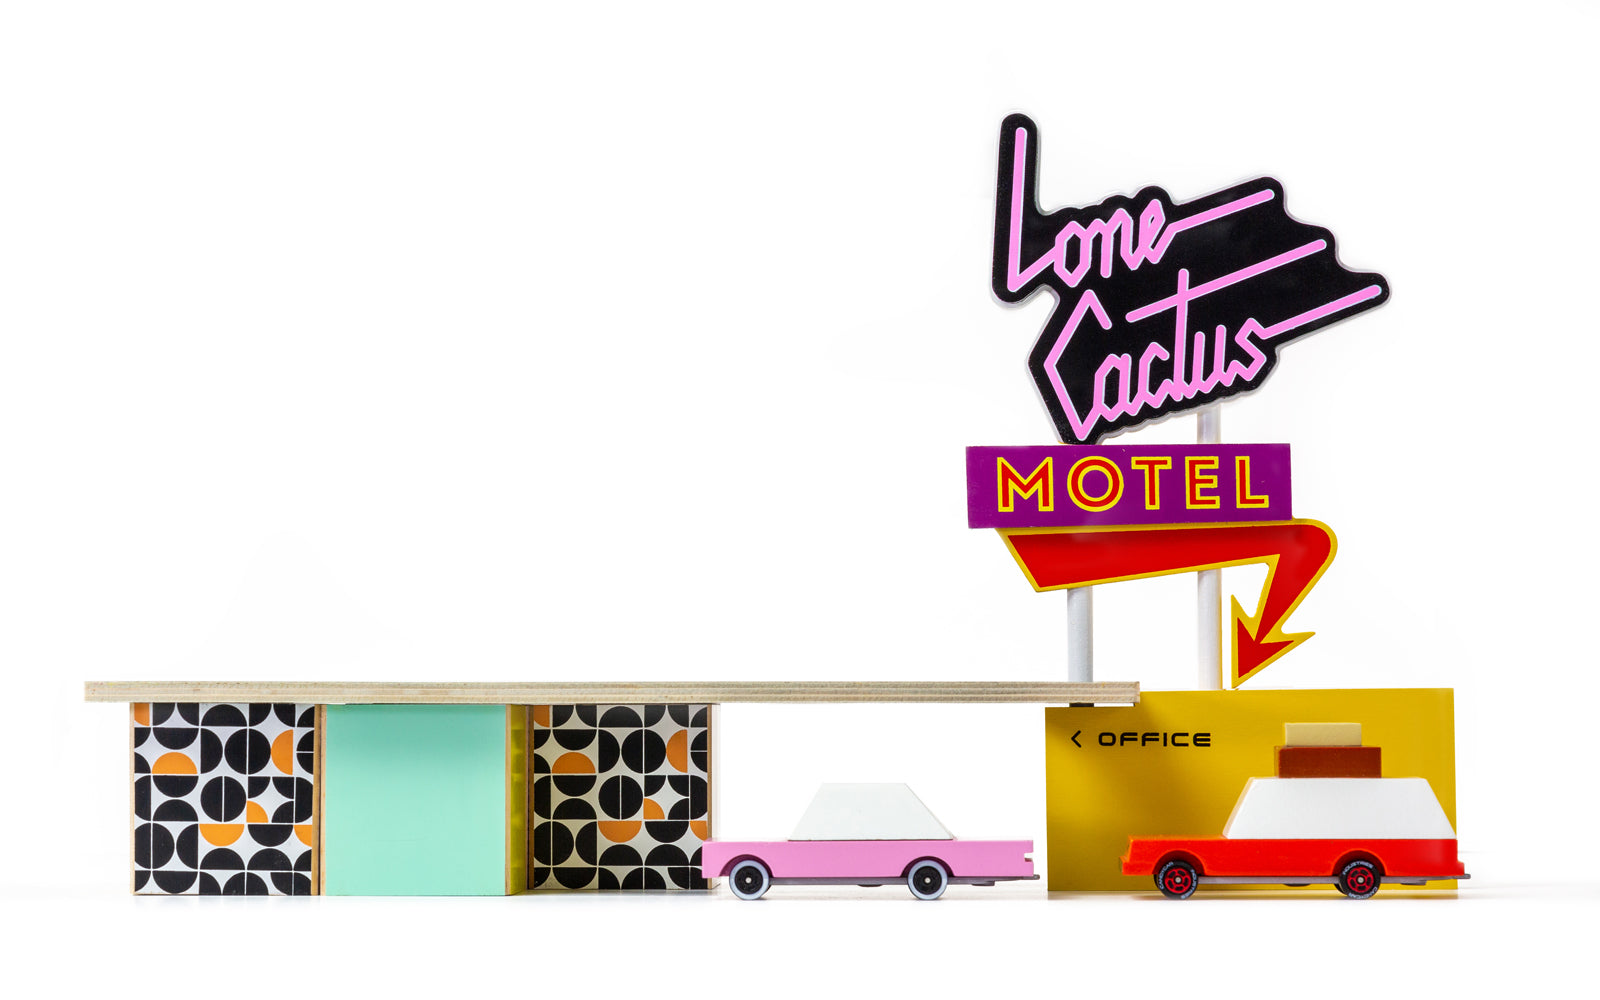 Lone Cactus Motel Combo